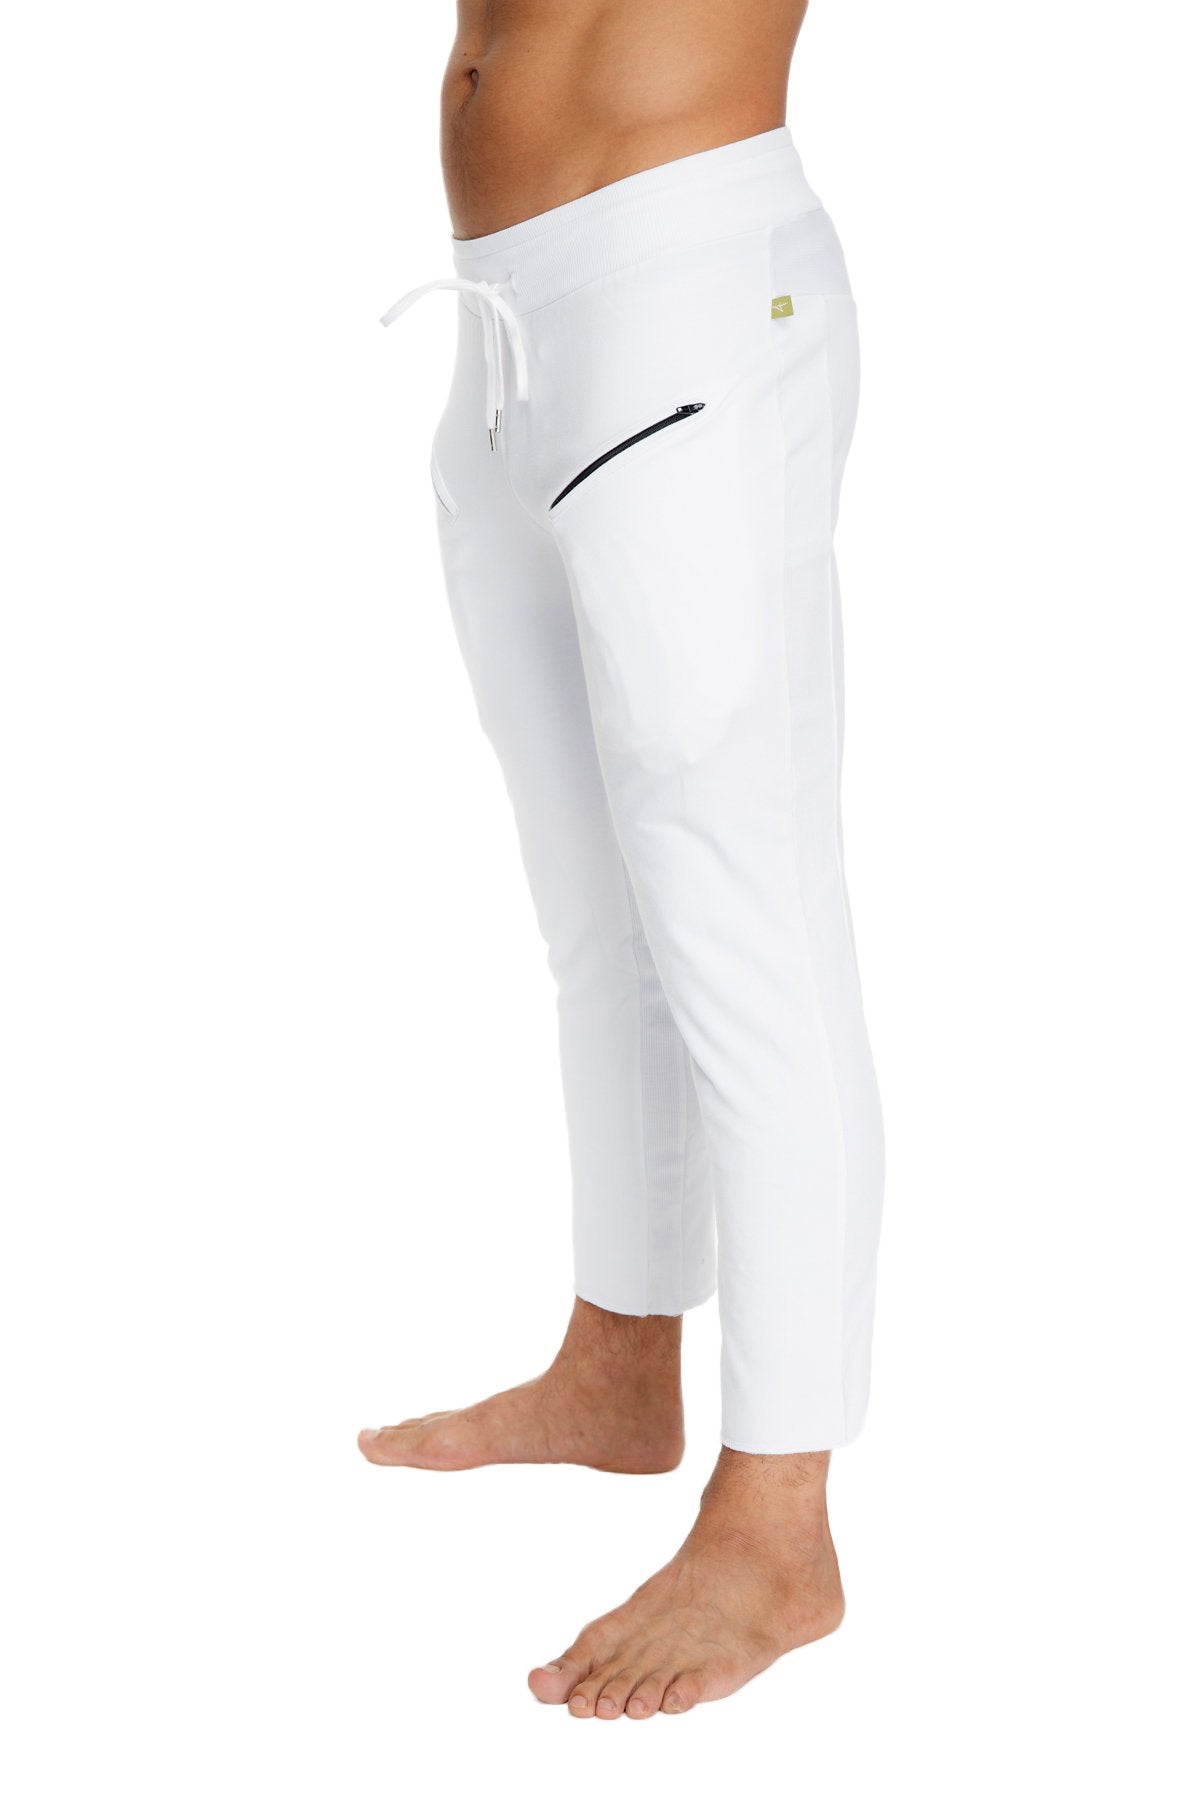 white yoga pants